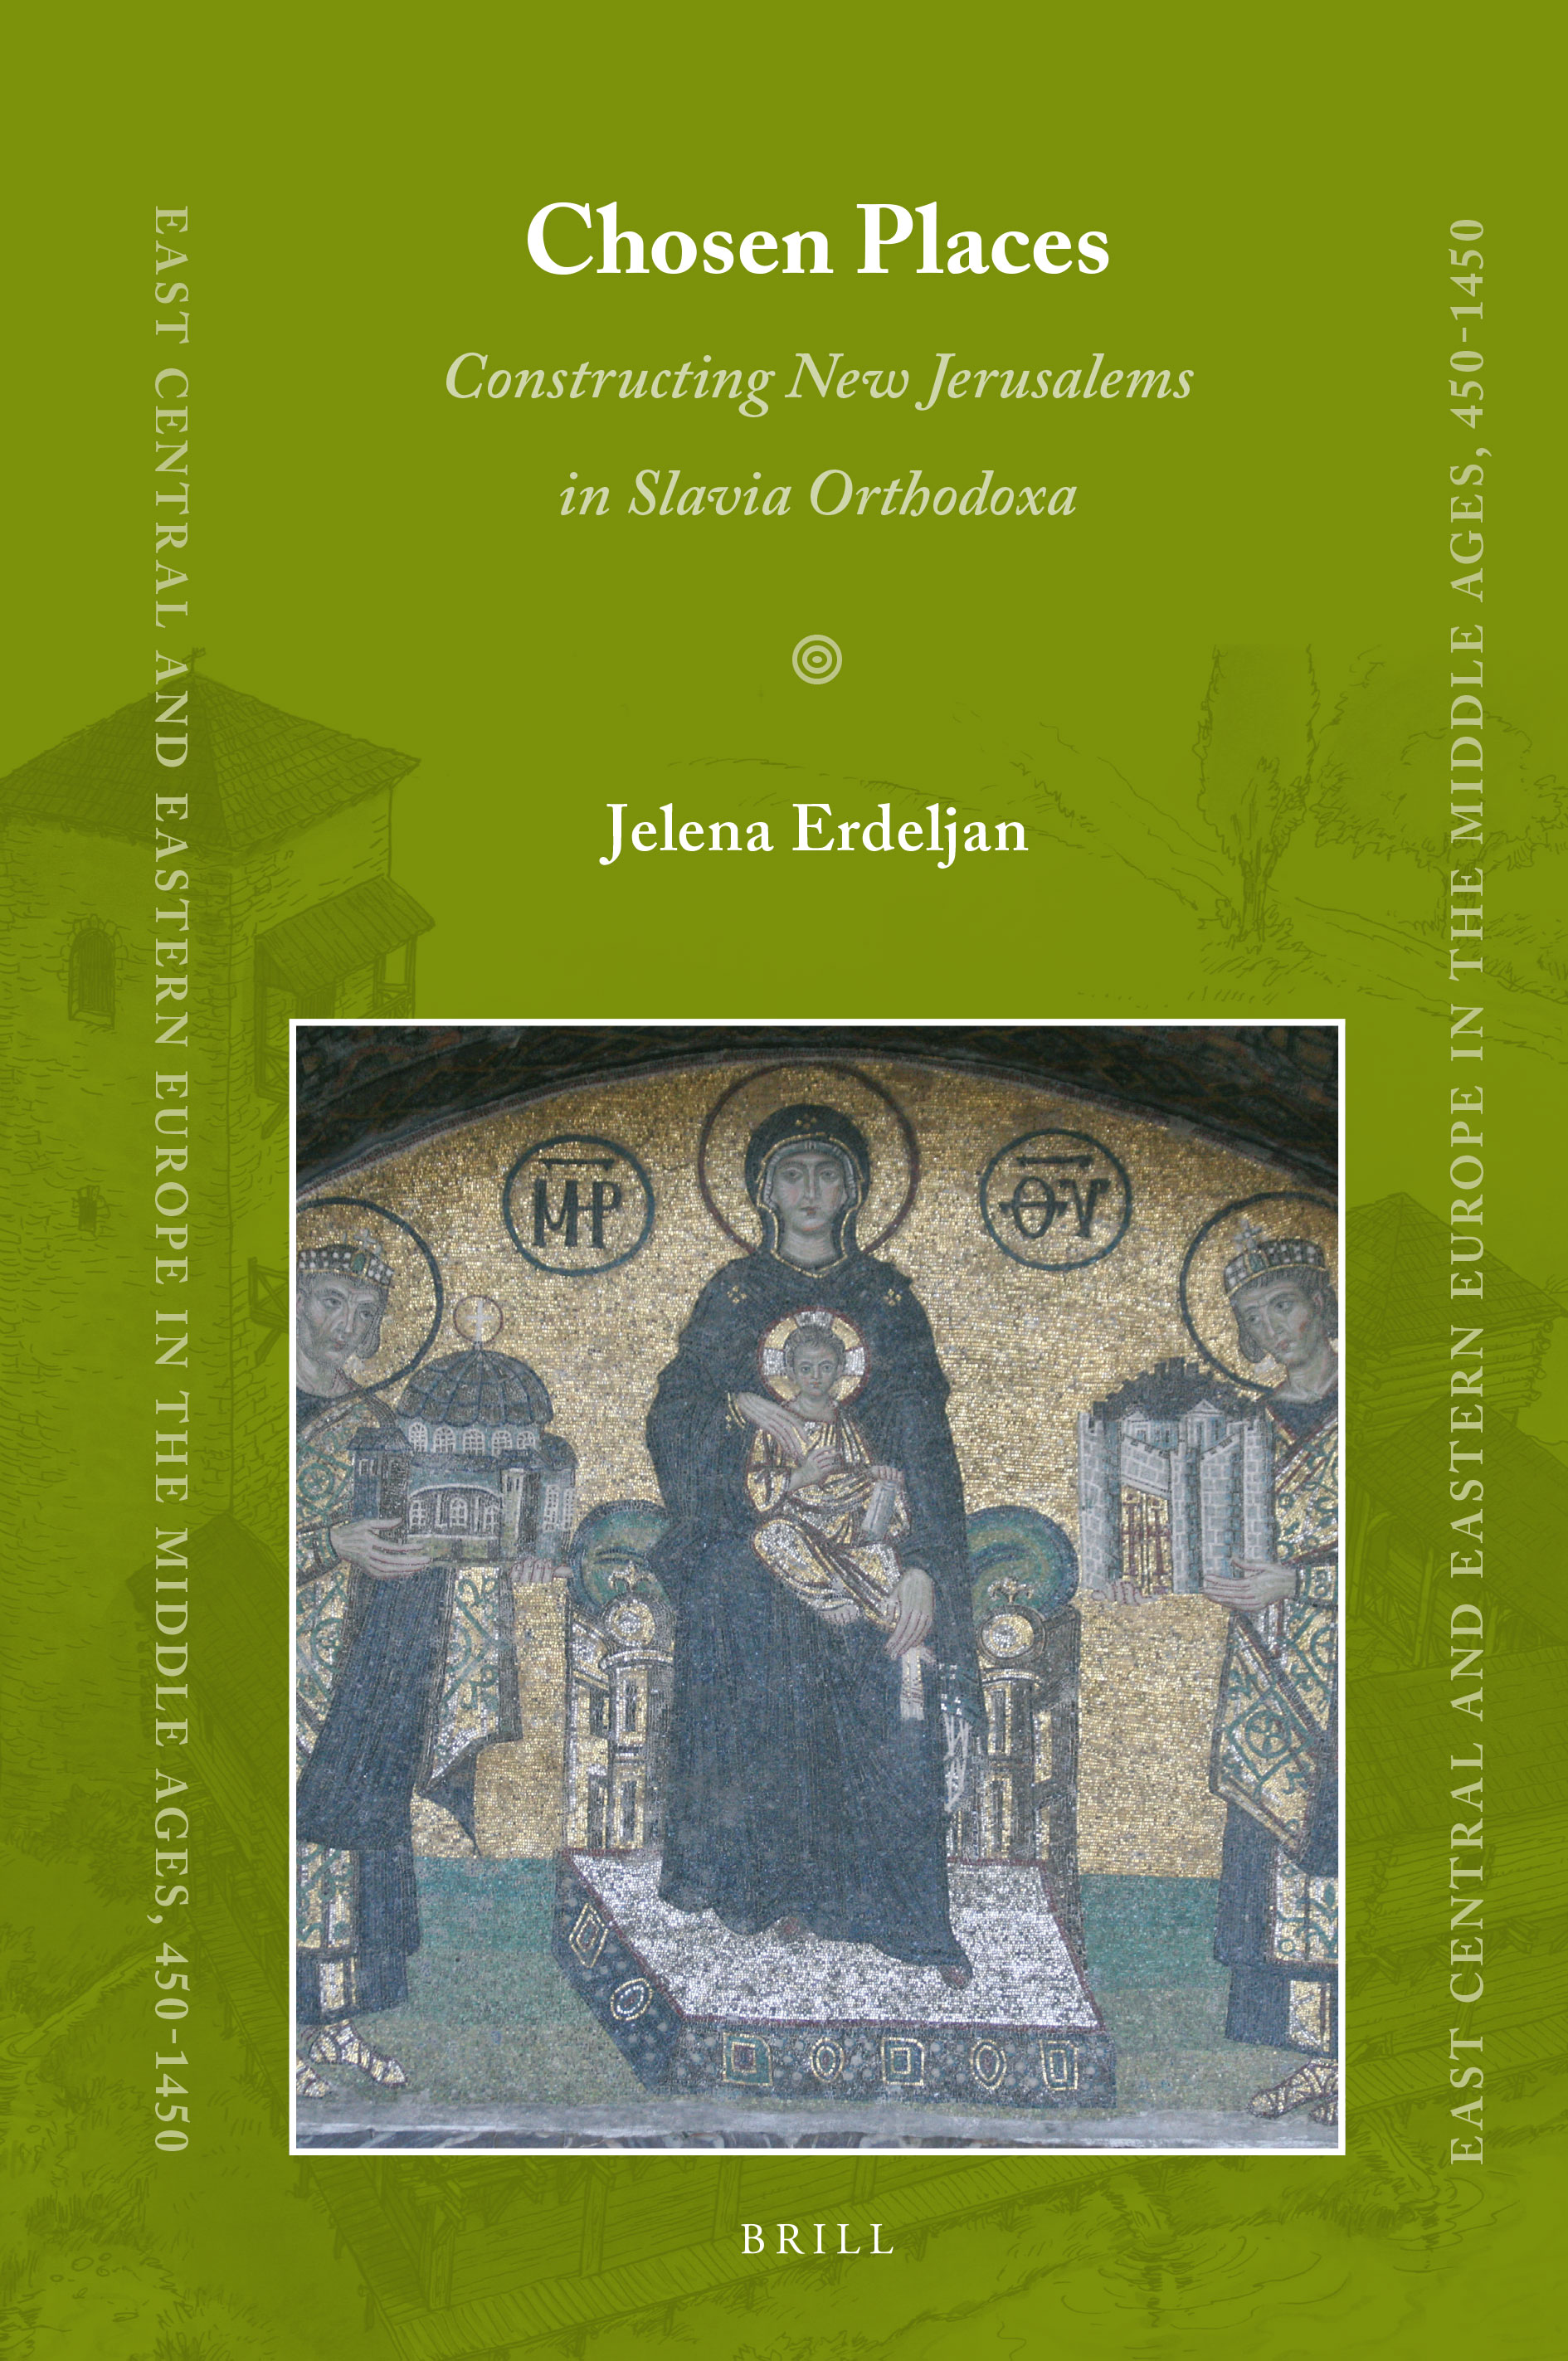 Review of J. Erdeljan, <i>Chosen Places: Constructing New Jerusalems in Slavia Orthodoxa</i> (Leiden and Boston: Brill, 2017), in <i>Speculum</i> 95, no. 2 (2020): 546-547. [A. I. Sullivan]